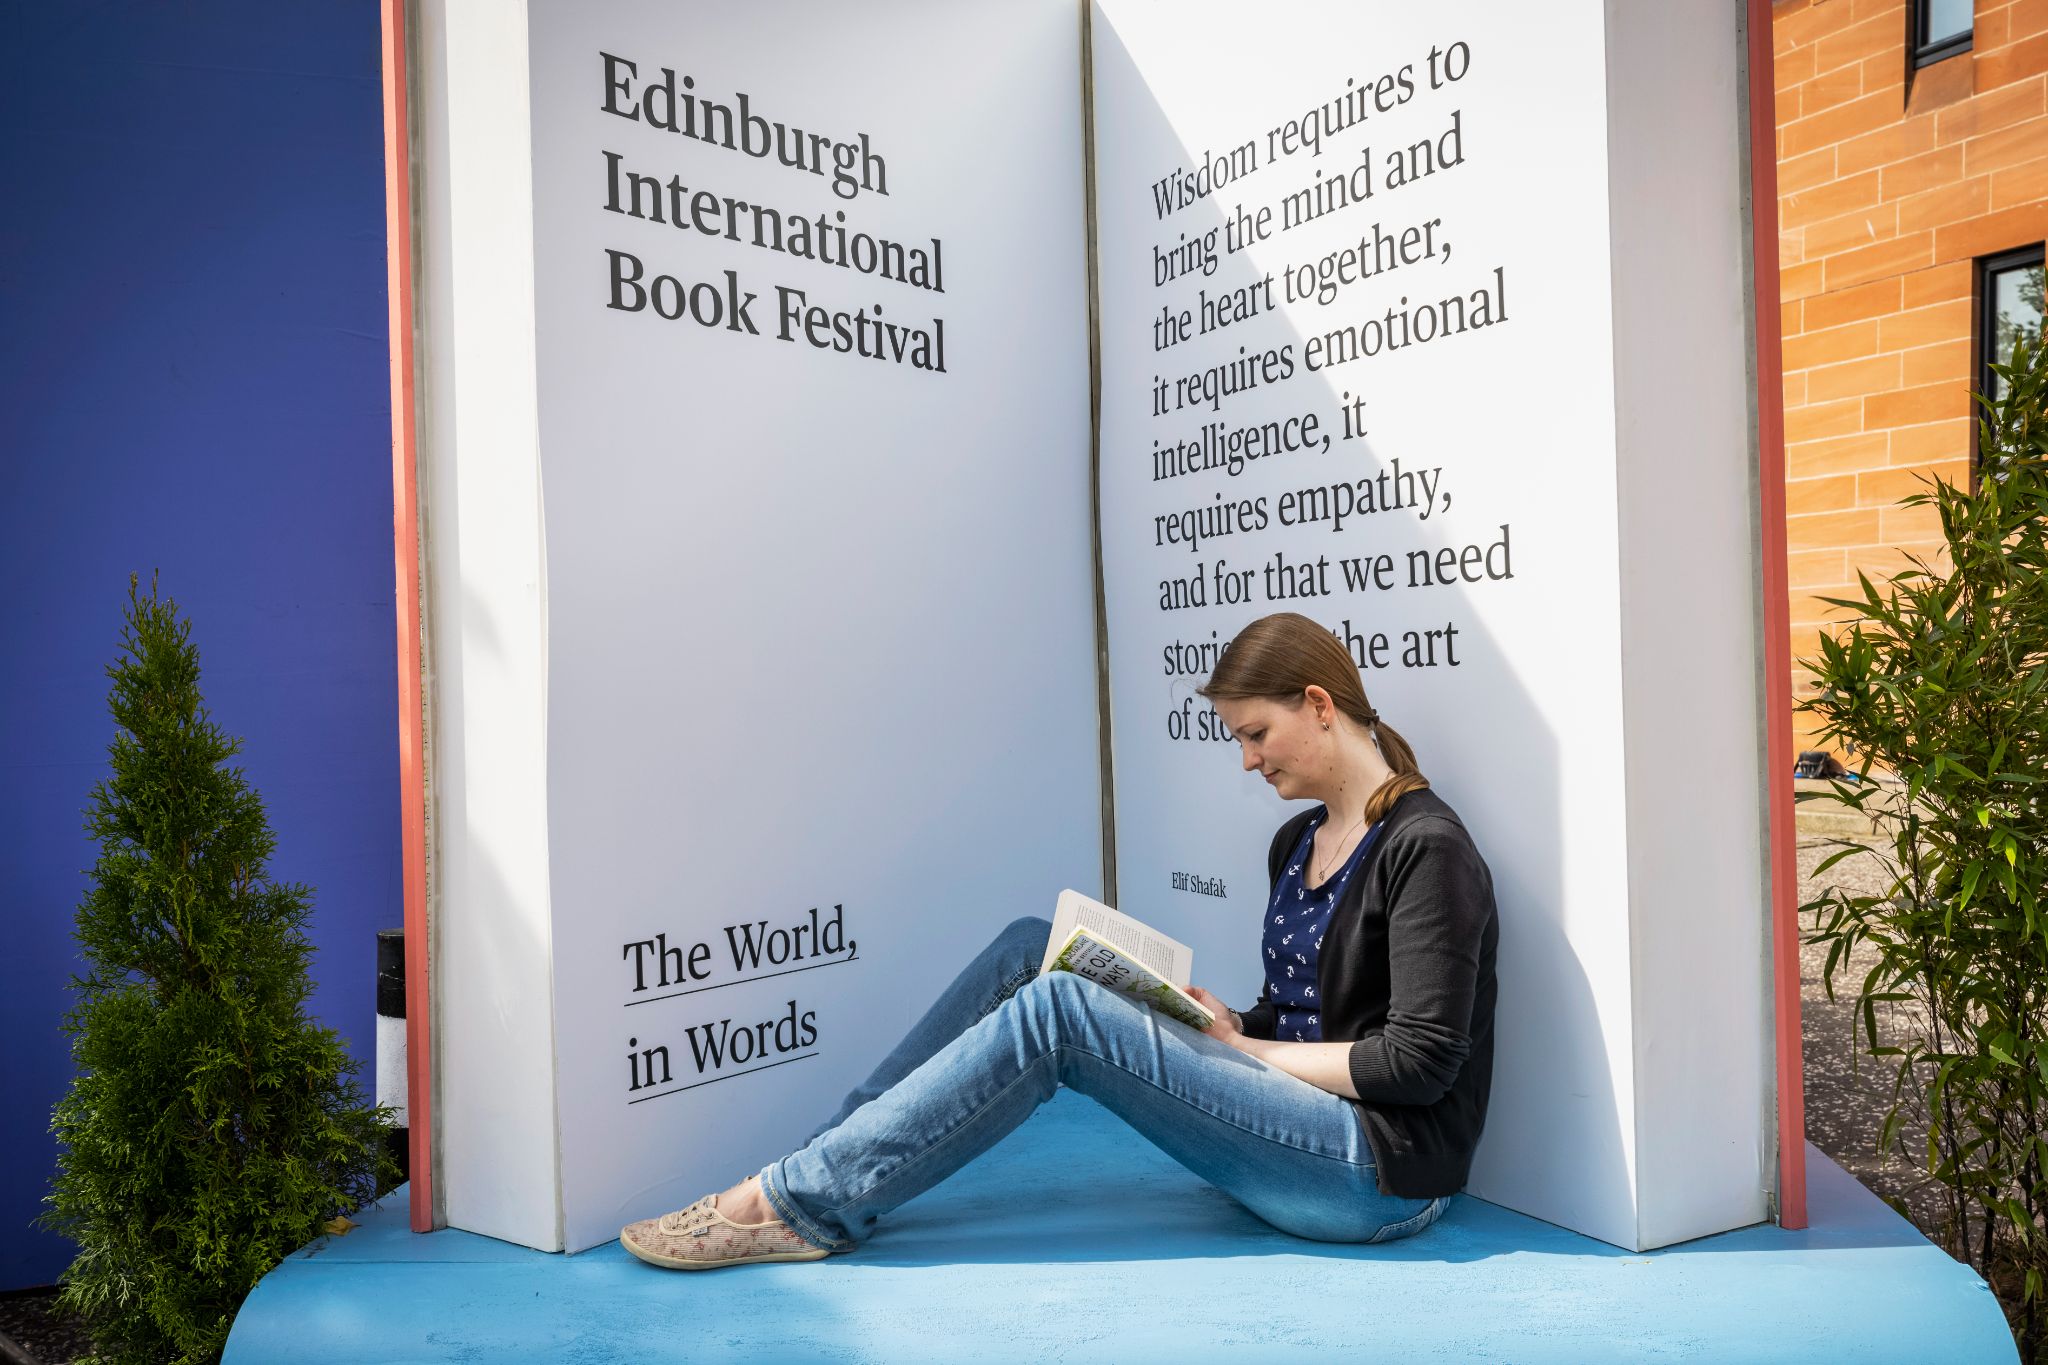 The Edinburgh International Book Festival